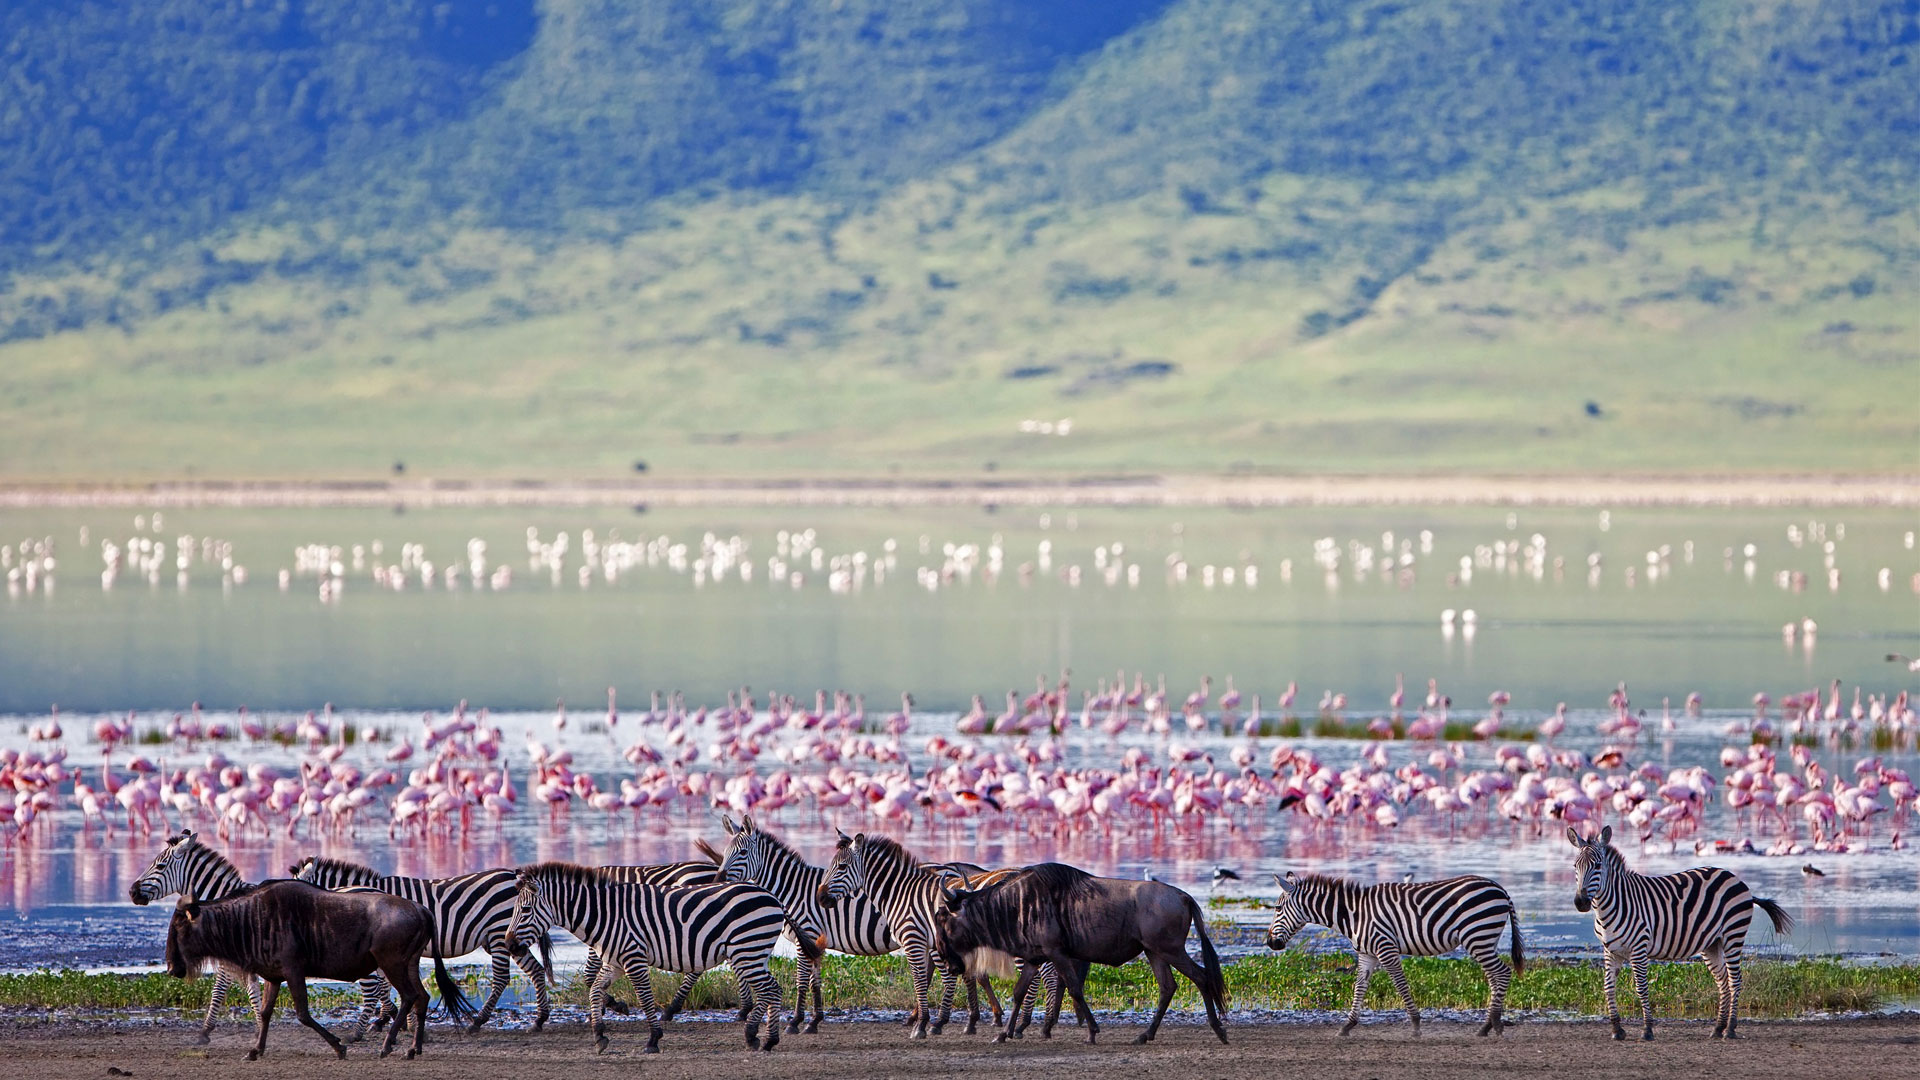 The Serengeti vs Maasai Mara Which is the Better Safari Destination?